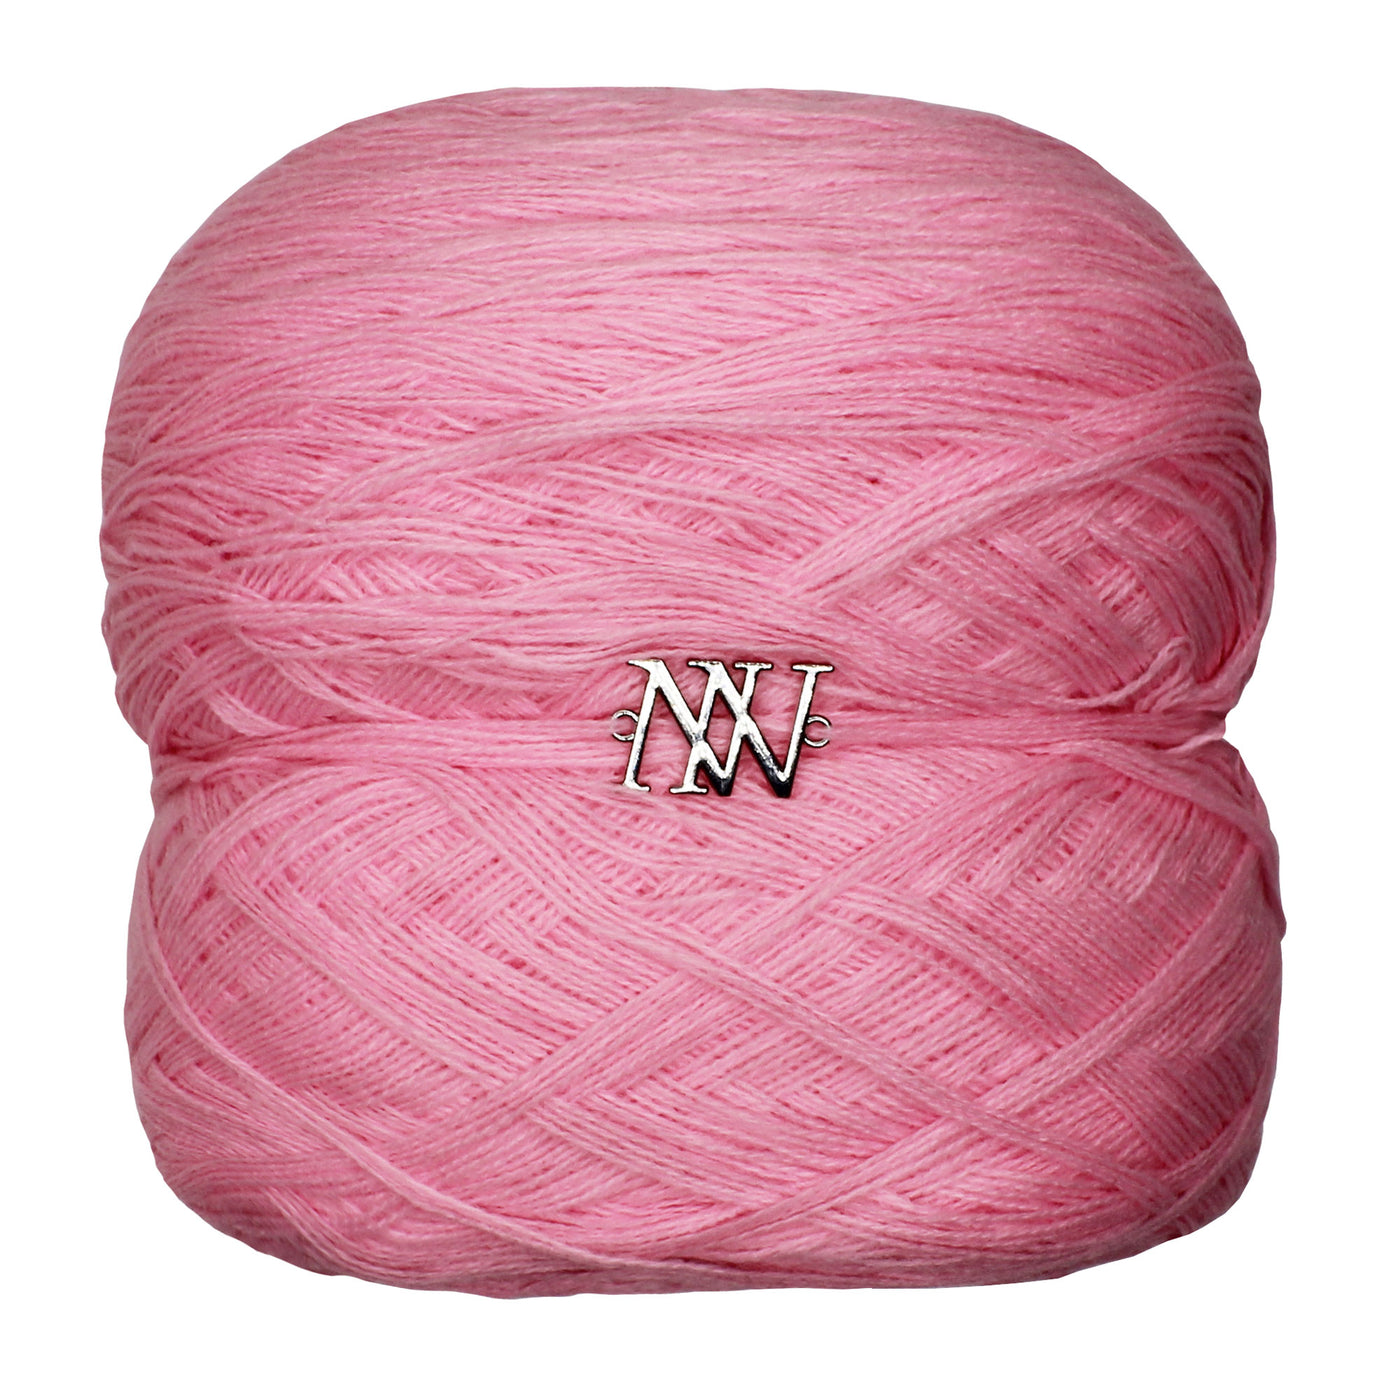 The Crafty Lady Boss Yarn - Pink